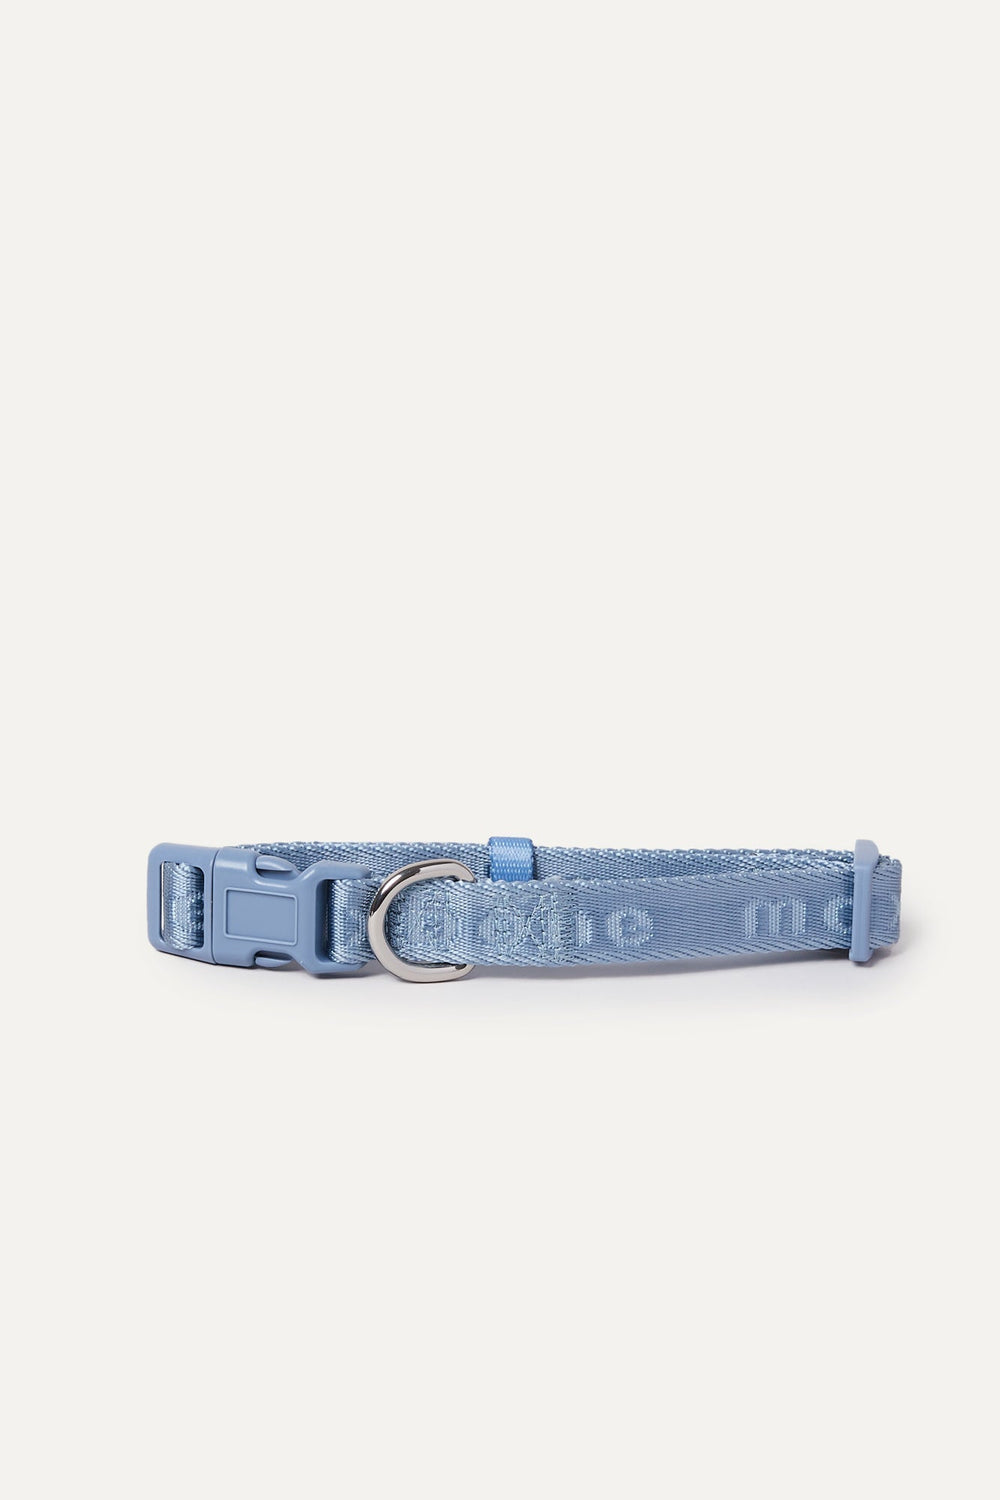 maxbone Signature Collar - Dusk Blue - Size Small